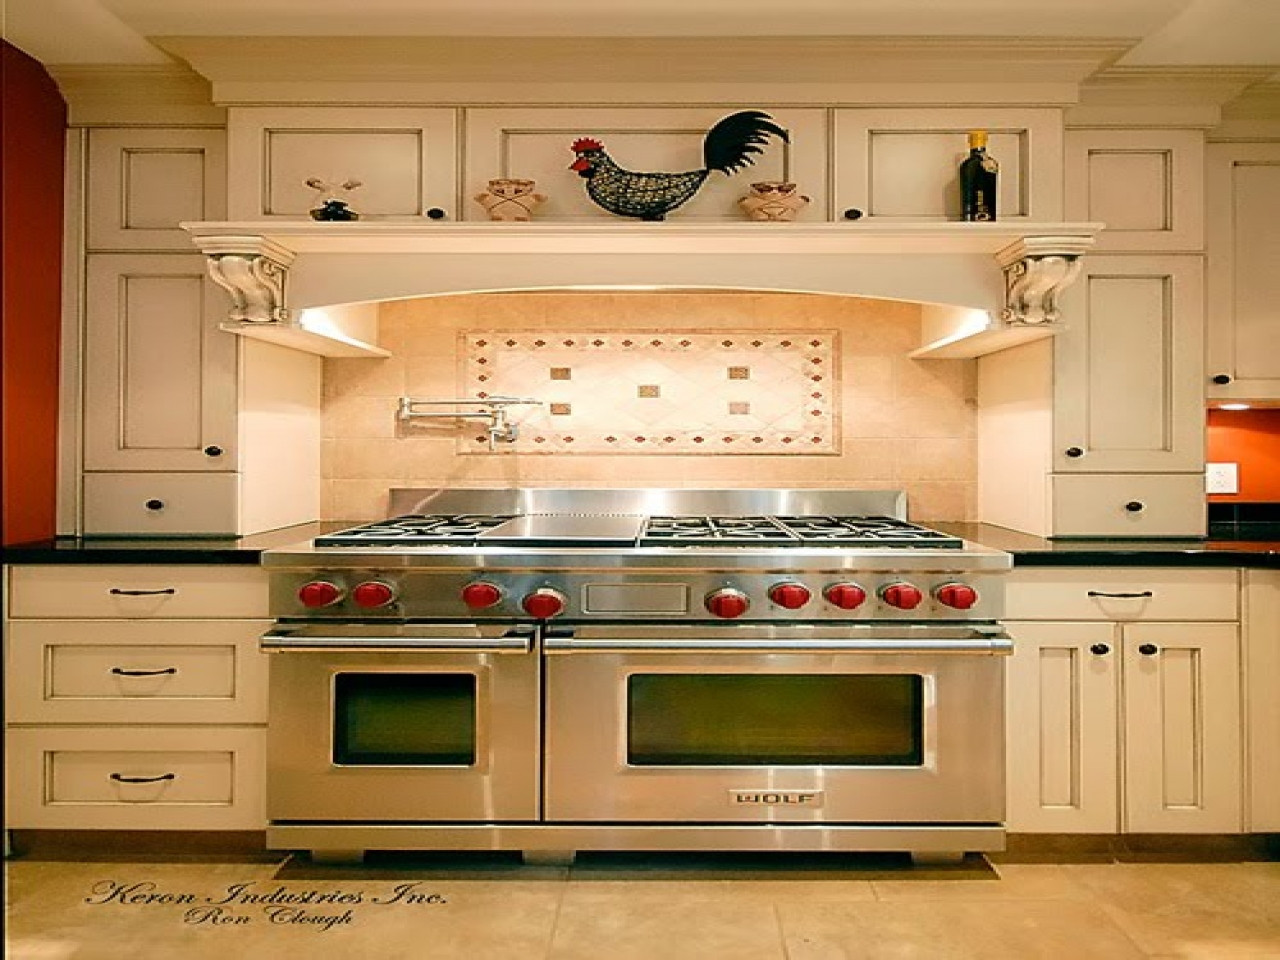 Best ideas about Kitchen Decorating Theme Ideas
. Save or Pin Kitchen themes decorating ideas fun kitchen themes Now.